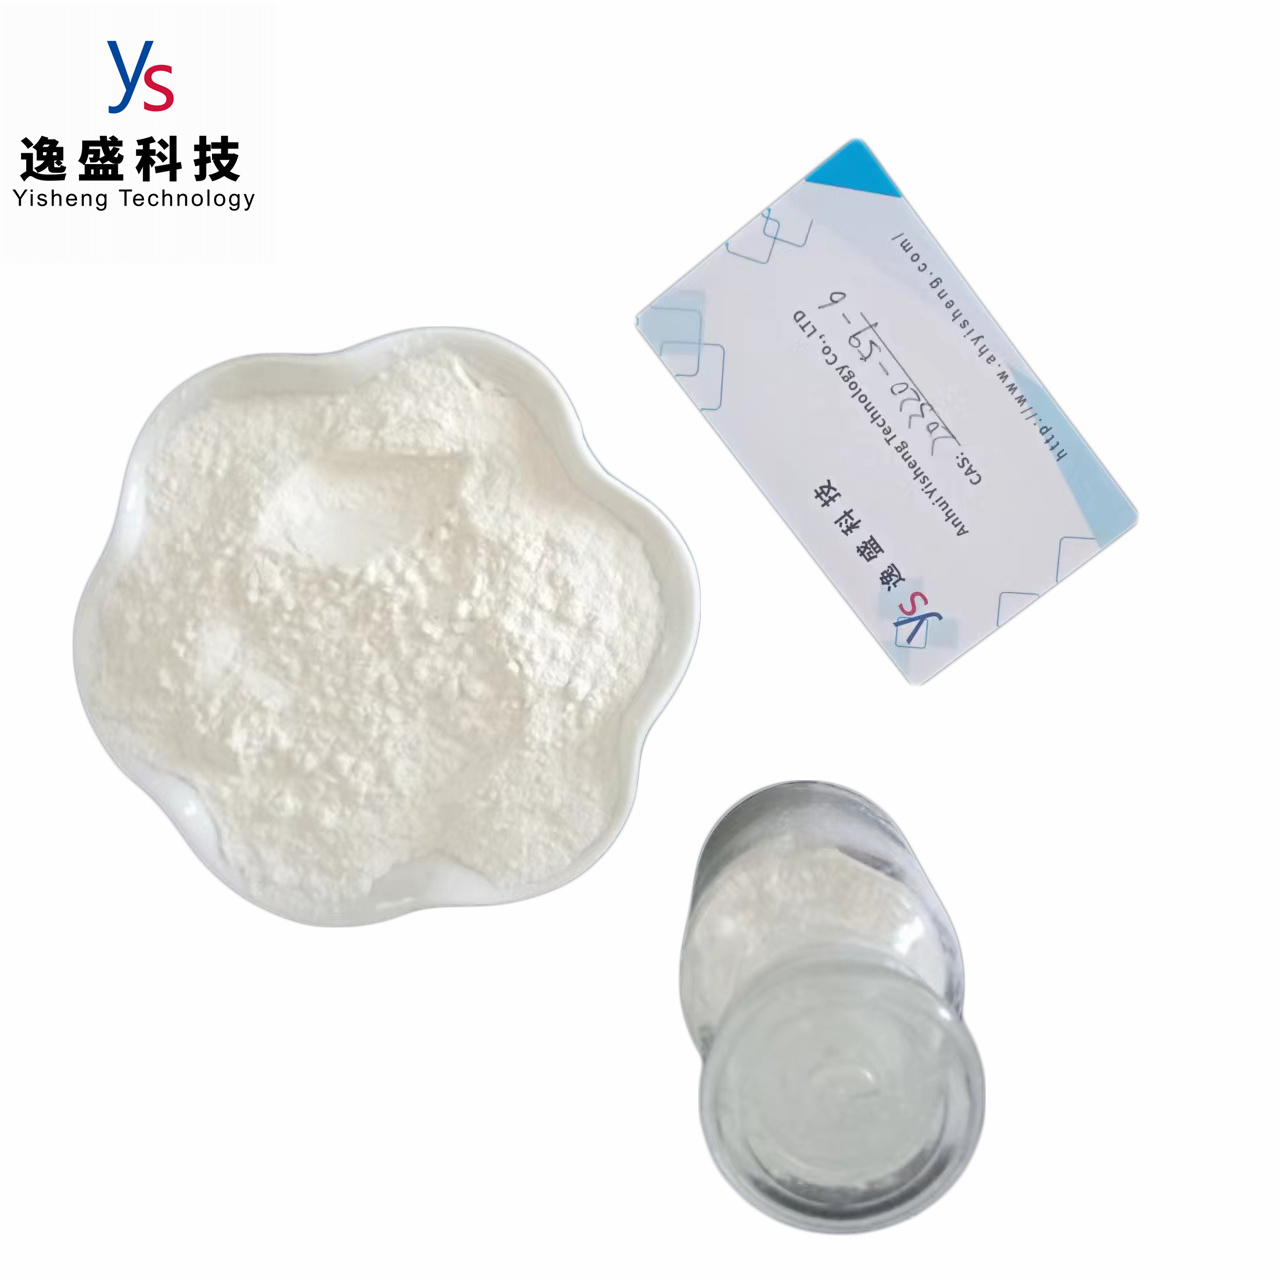 CAS 20320-59-6 Pharmaceutical Intermediates BMK Powder High Purity 